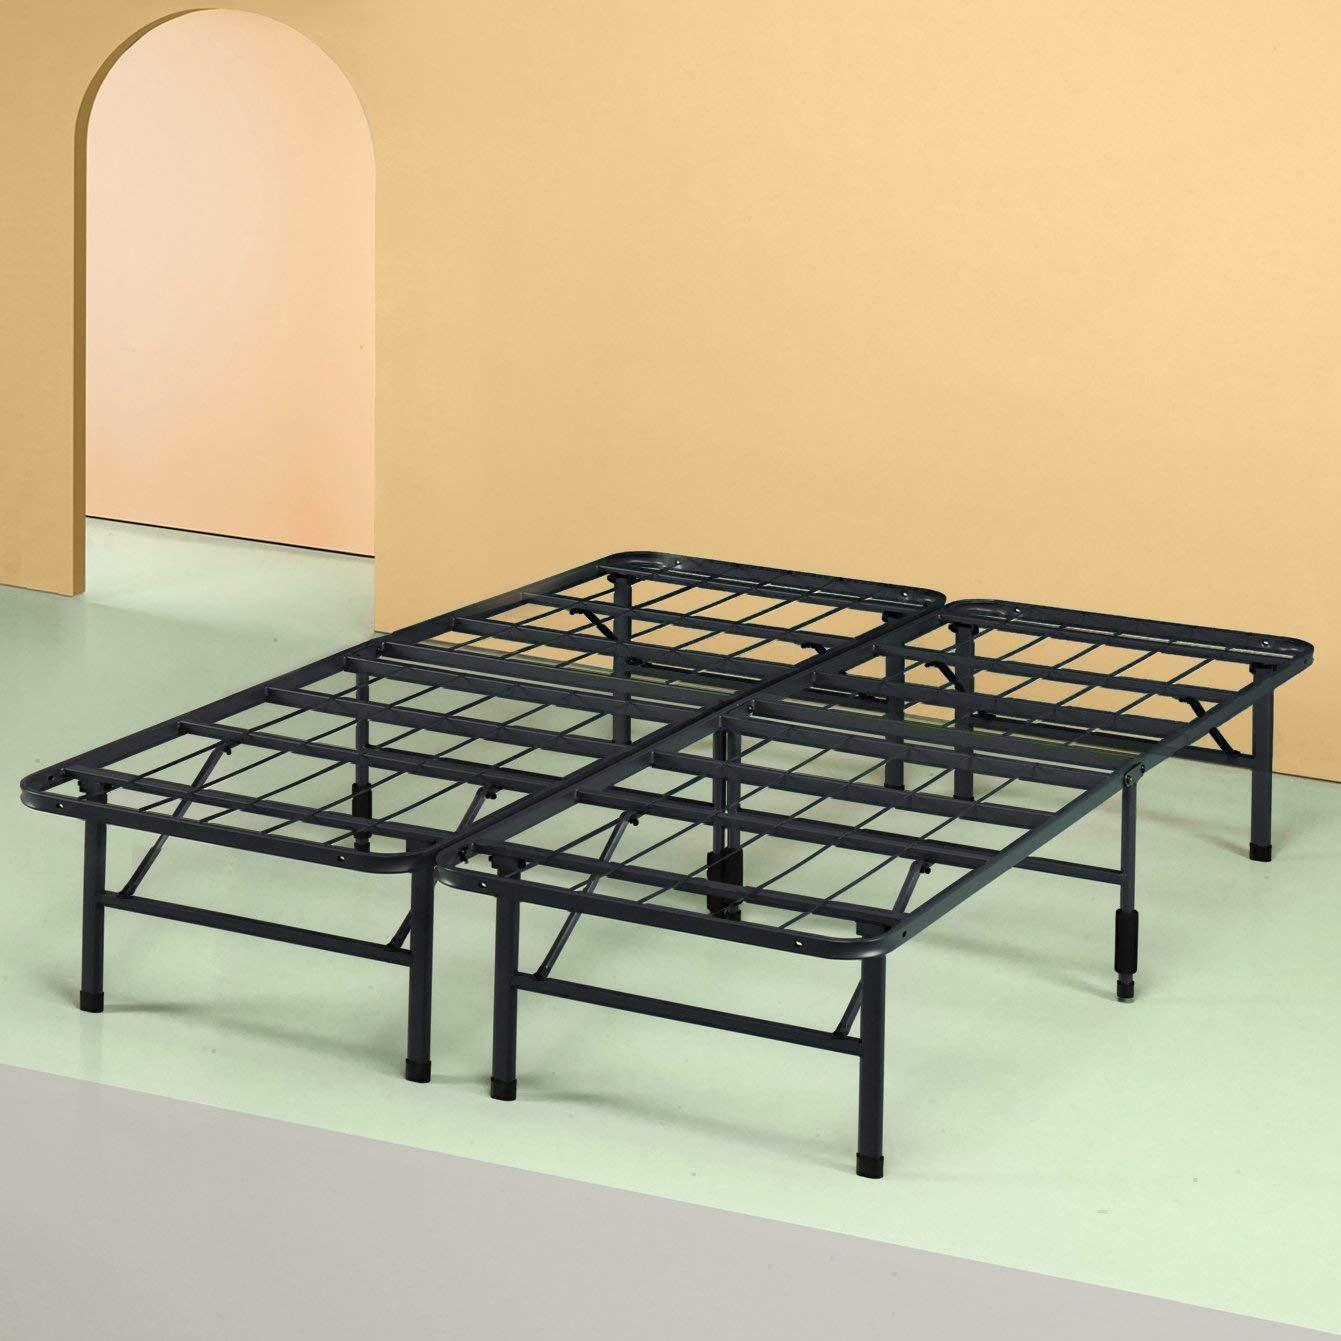 19 Best Metal Bed Frames 2020 The, Metal Bed Frame With Adjustable Legs